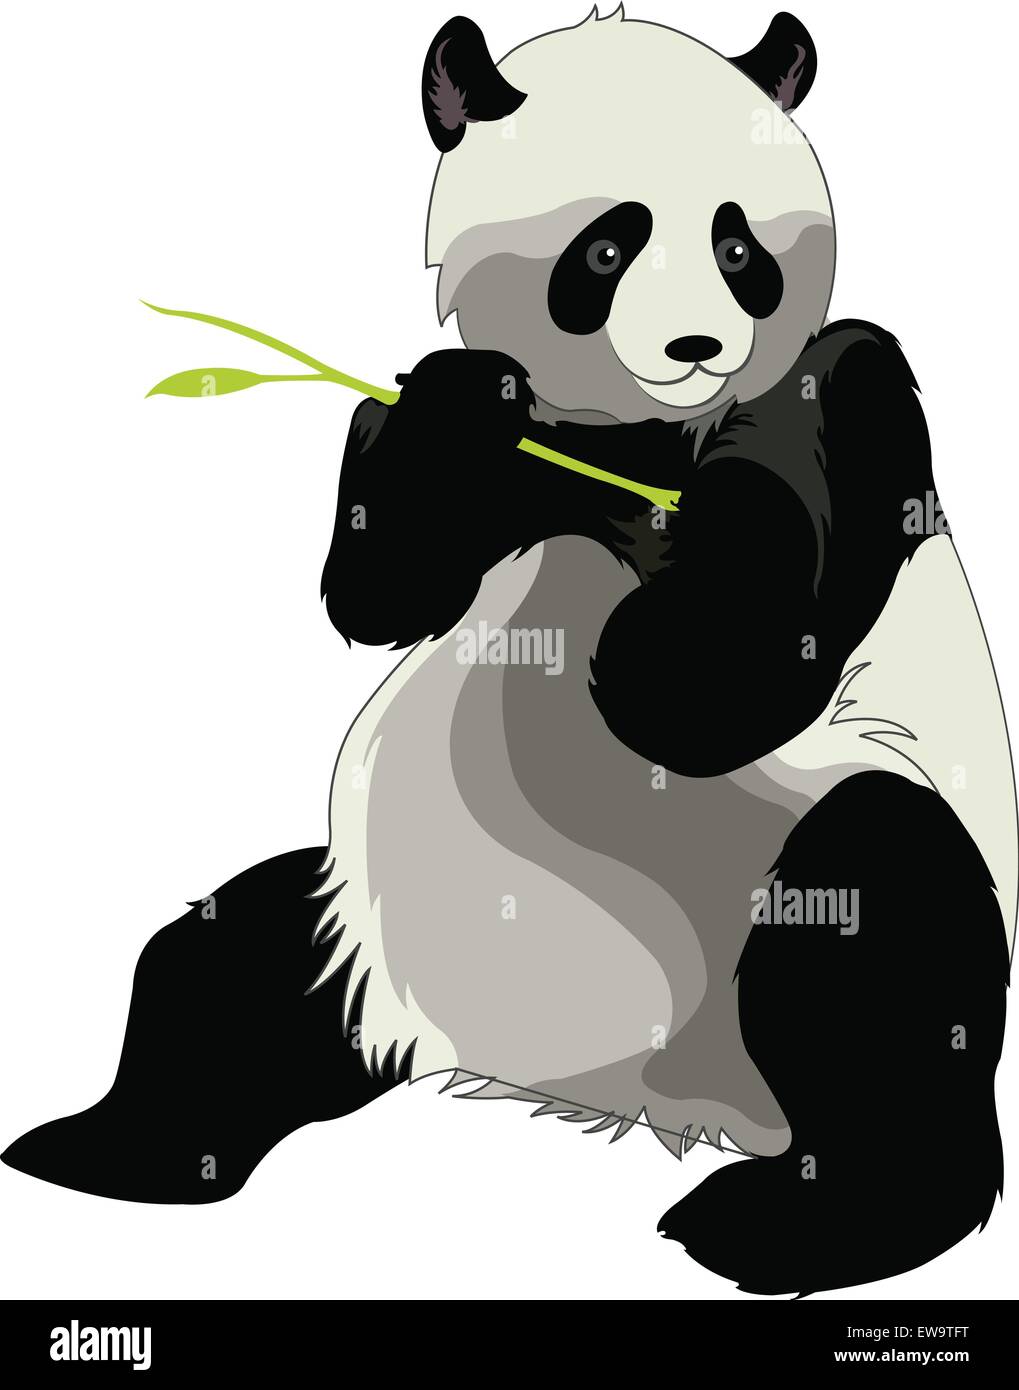 Giant Panda or Ailuropoda melanoleuca, Eating a Bamboo Shoot, vector illustration Stock Vector